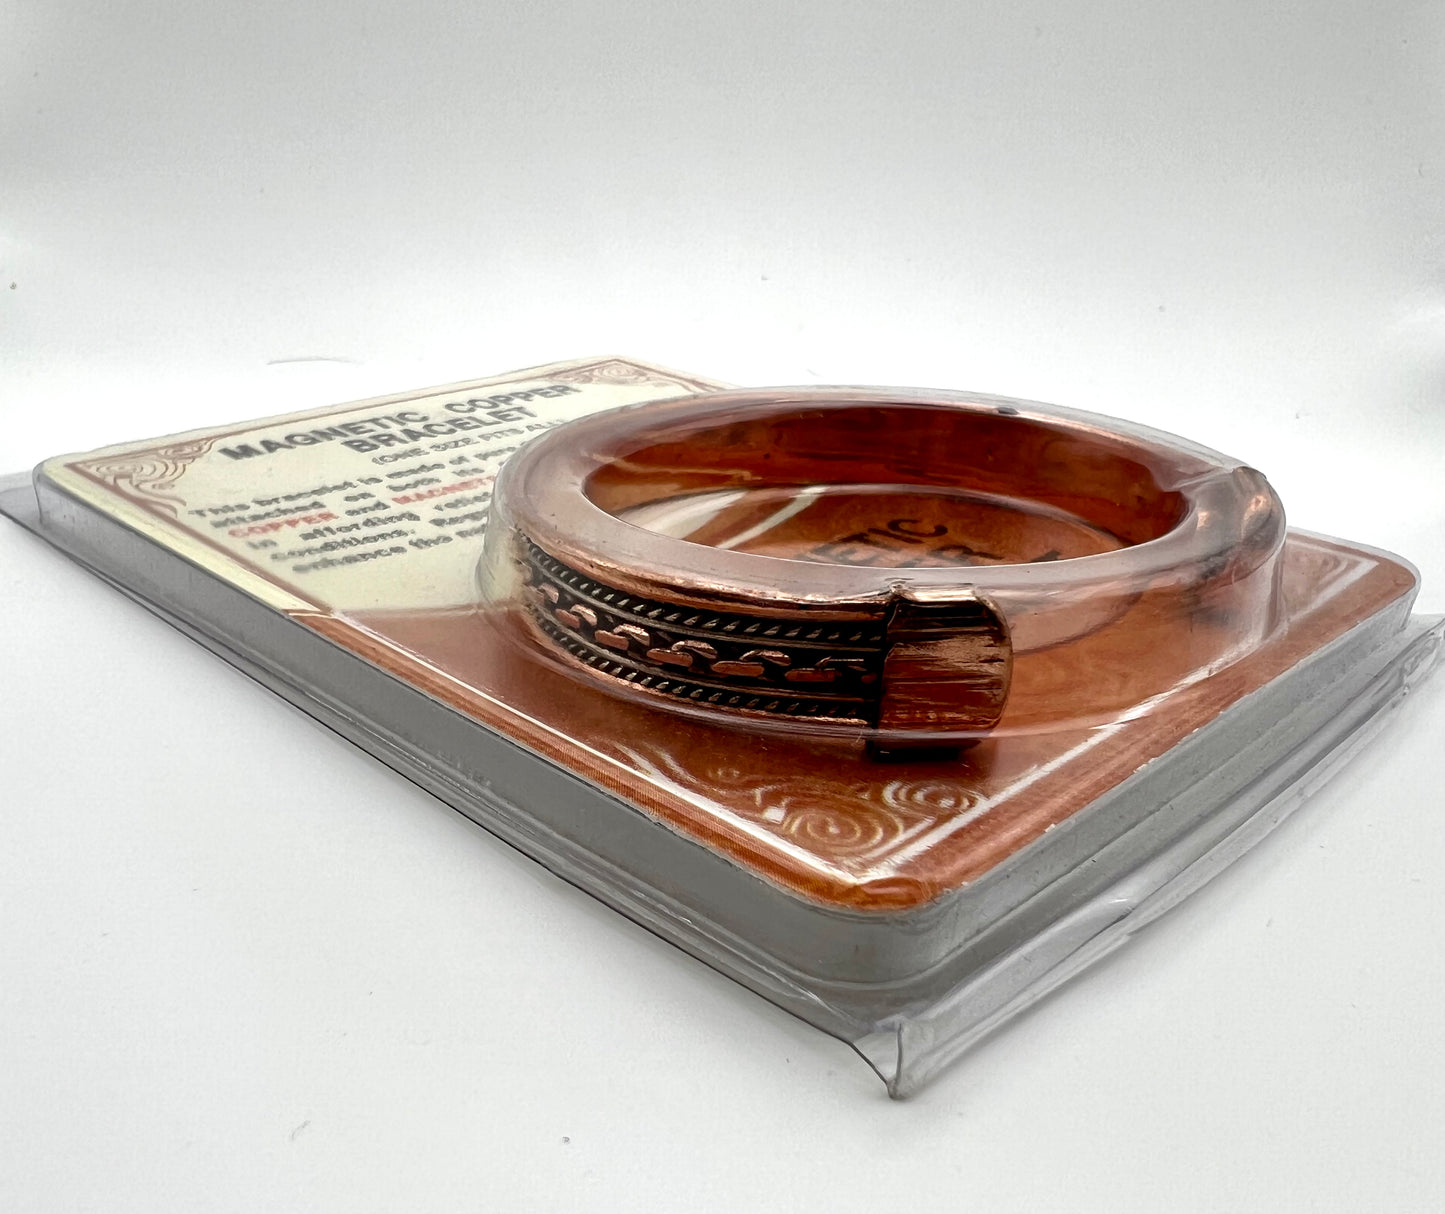 Magnetic Copper Bracelet (Pack of 2)